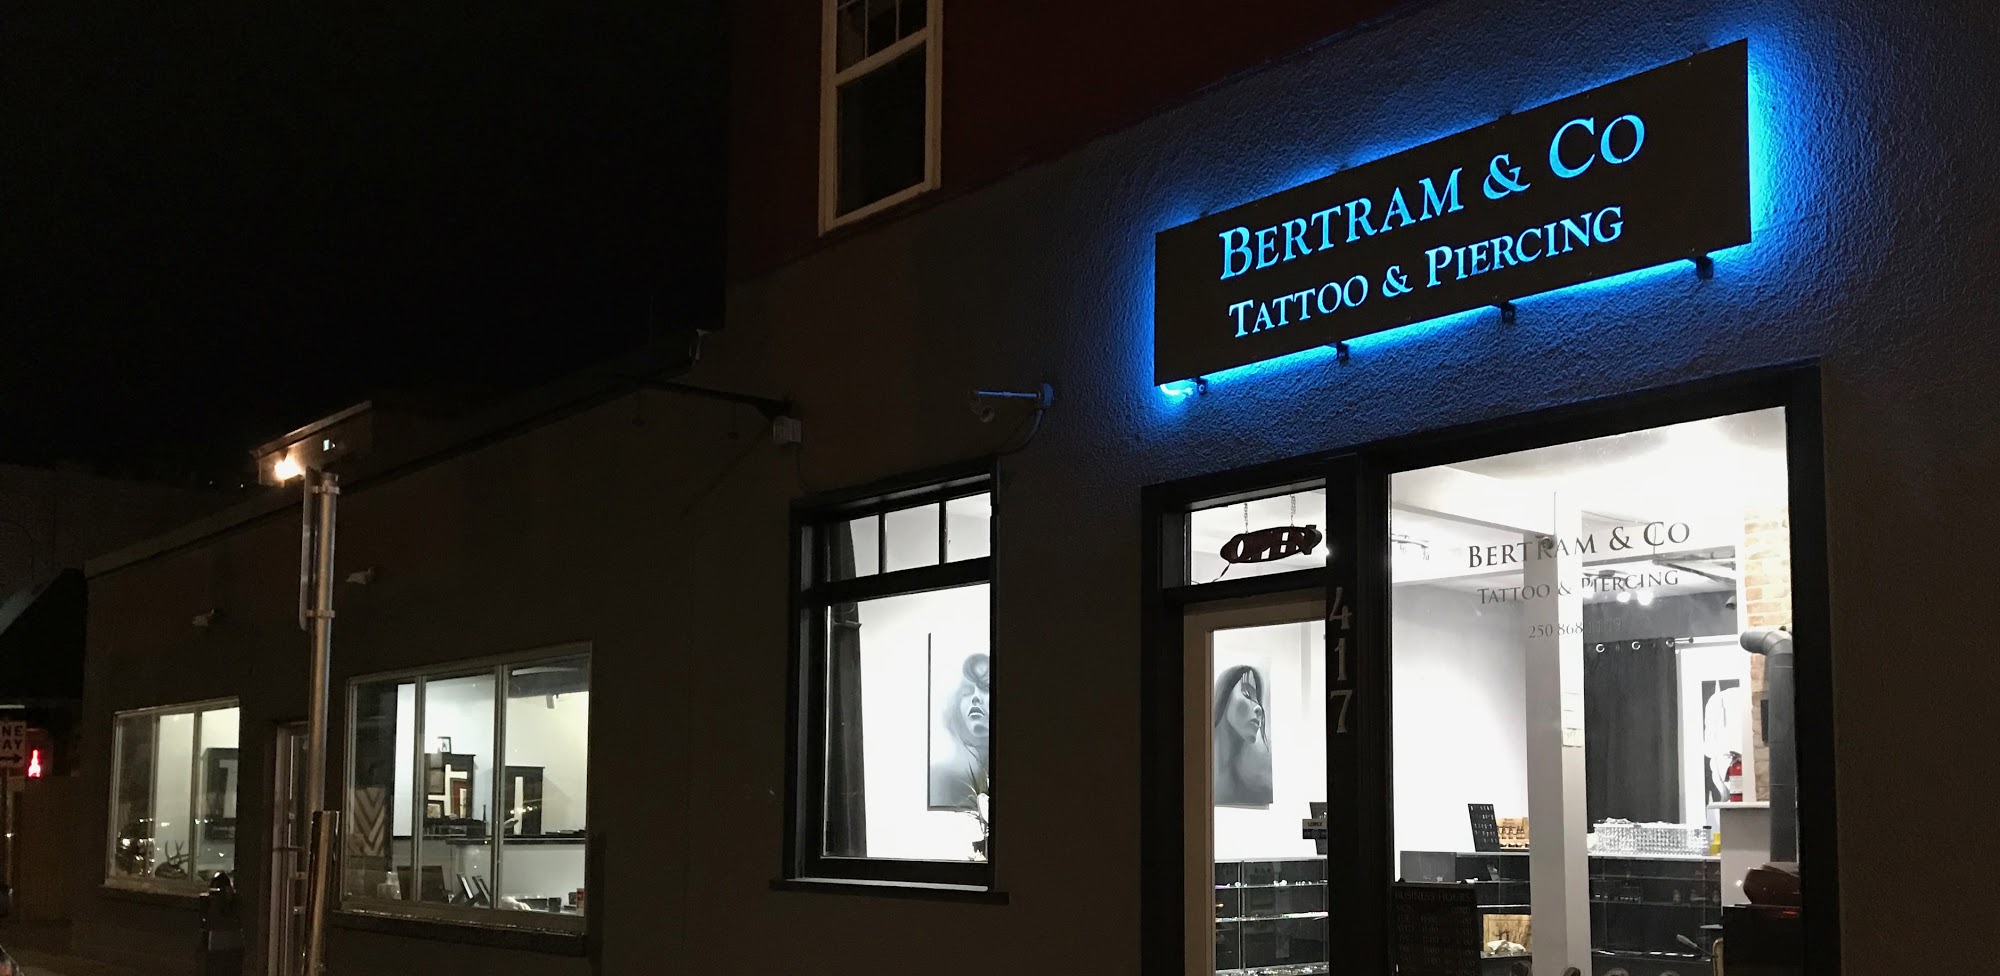 Bertram & Co Tattoo and Piercing